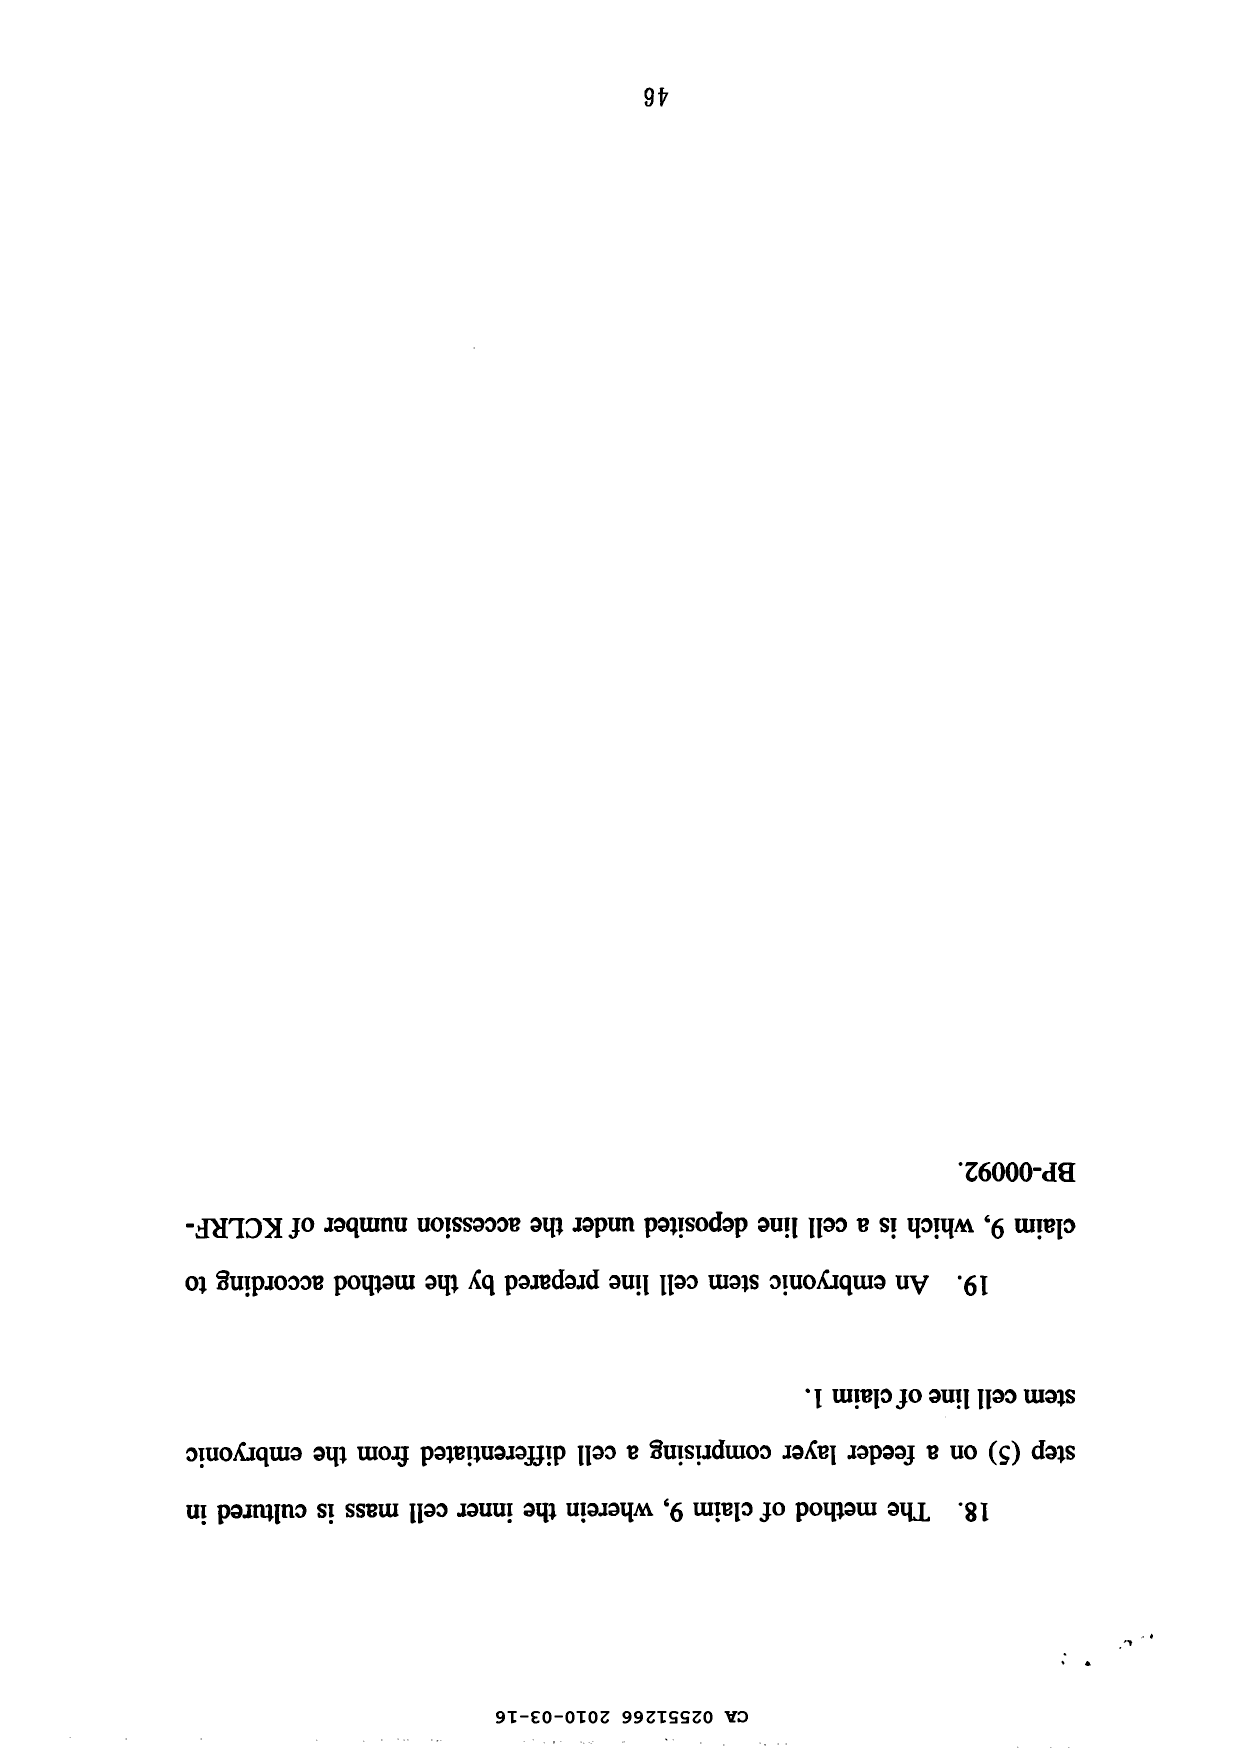 Canadian Patent Document 2551266. Prosecution-Amendment 20091216. Image 3 of 3